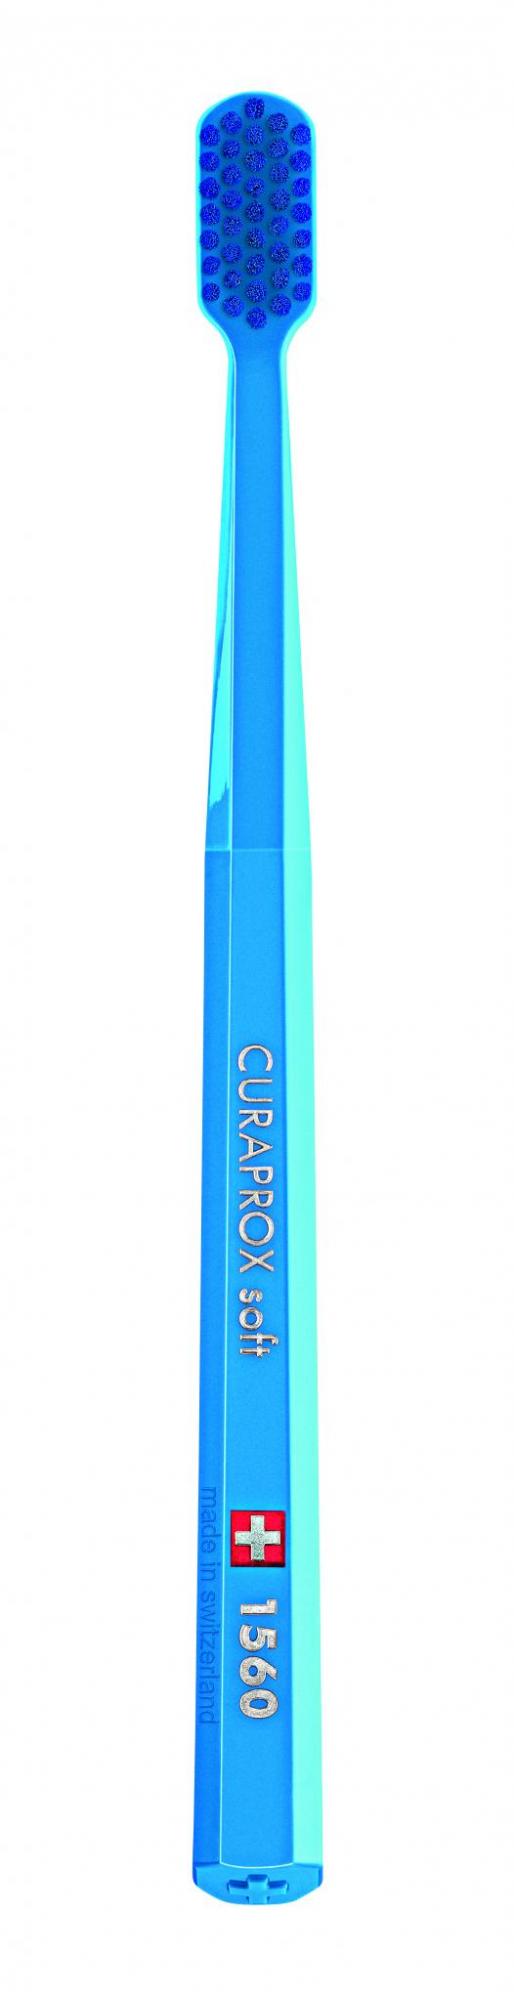 Cepillo Dental Curaprox CS 1560 Soft